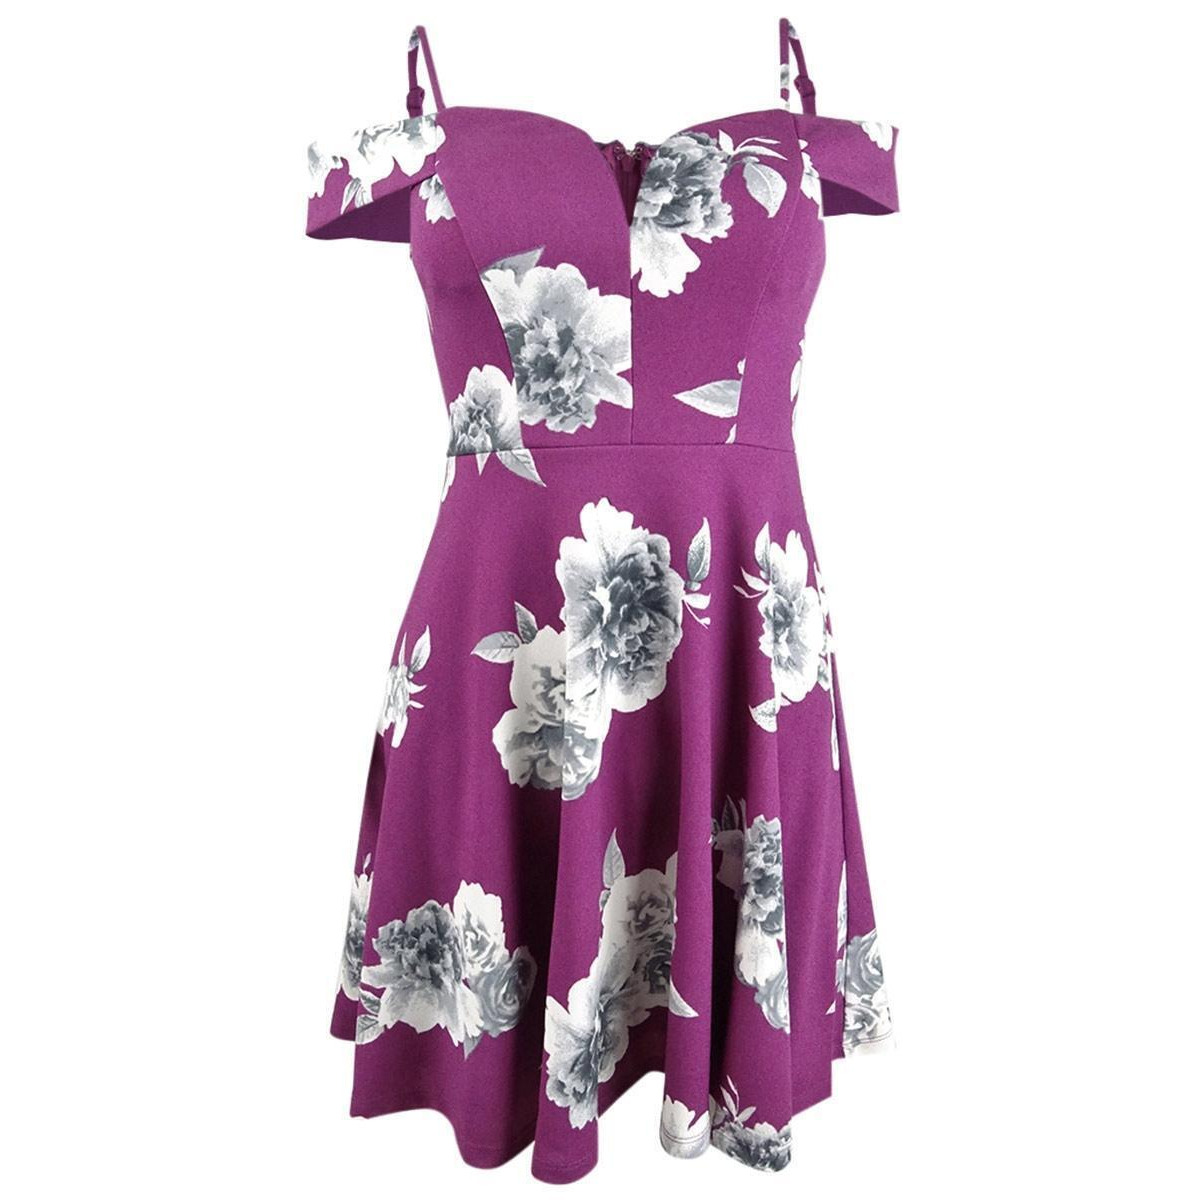 City Studios Juniors' Off-The-Shoulder Floral-Print Dress alternate image